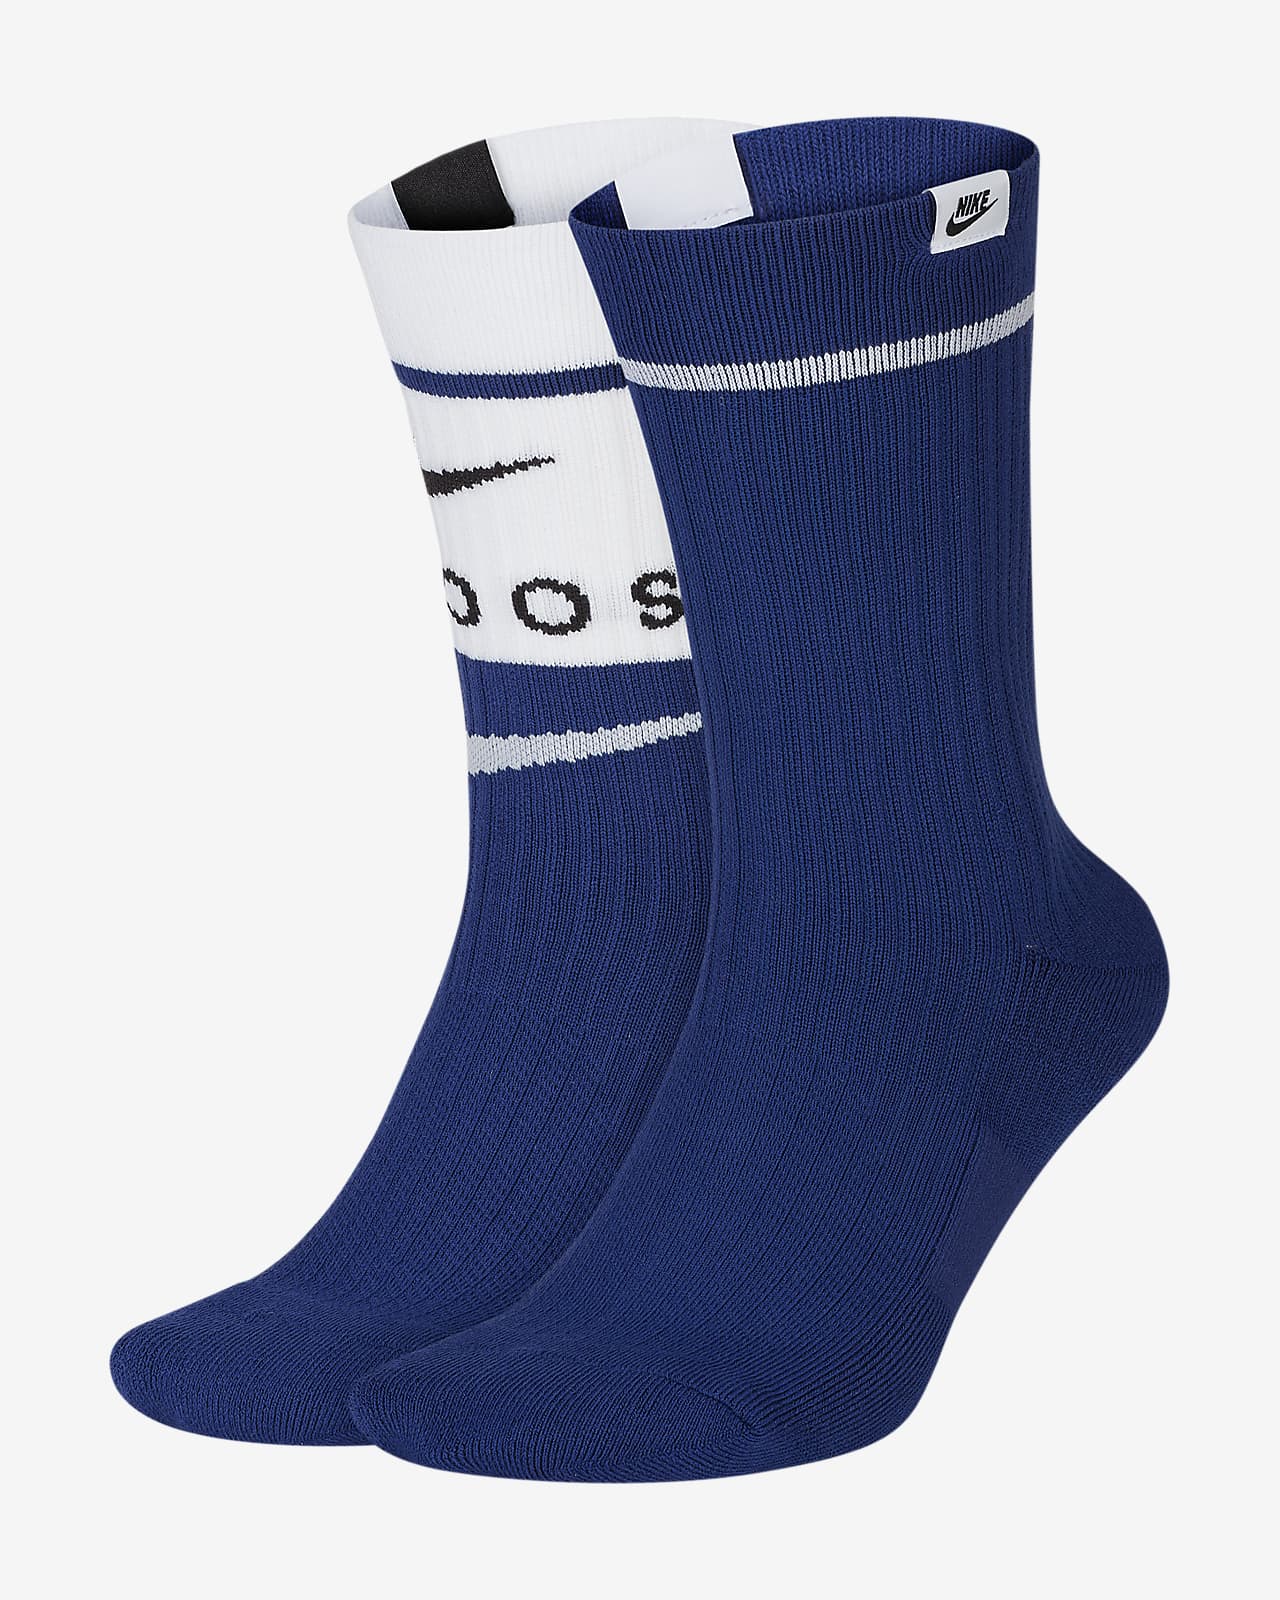 Nike SNKR Sox Crew Socks (2 Pairs)